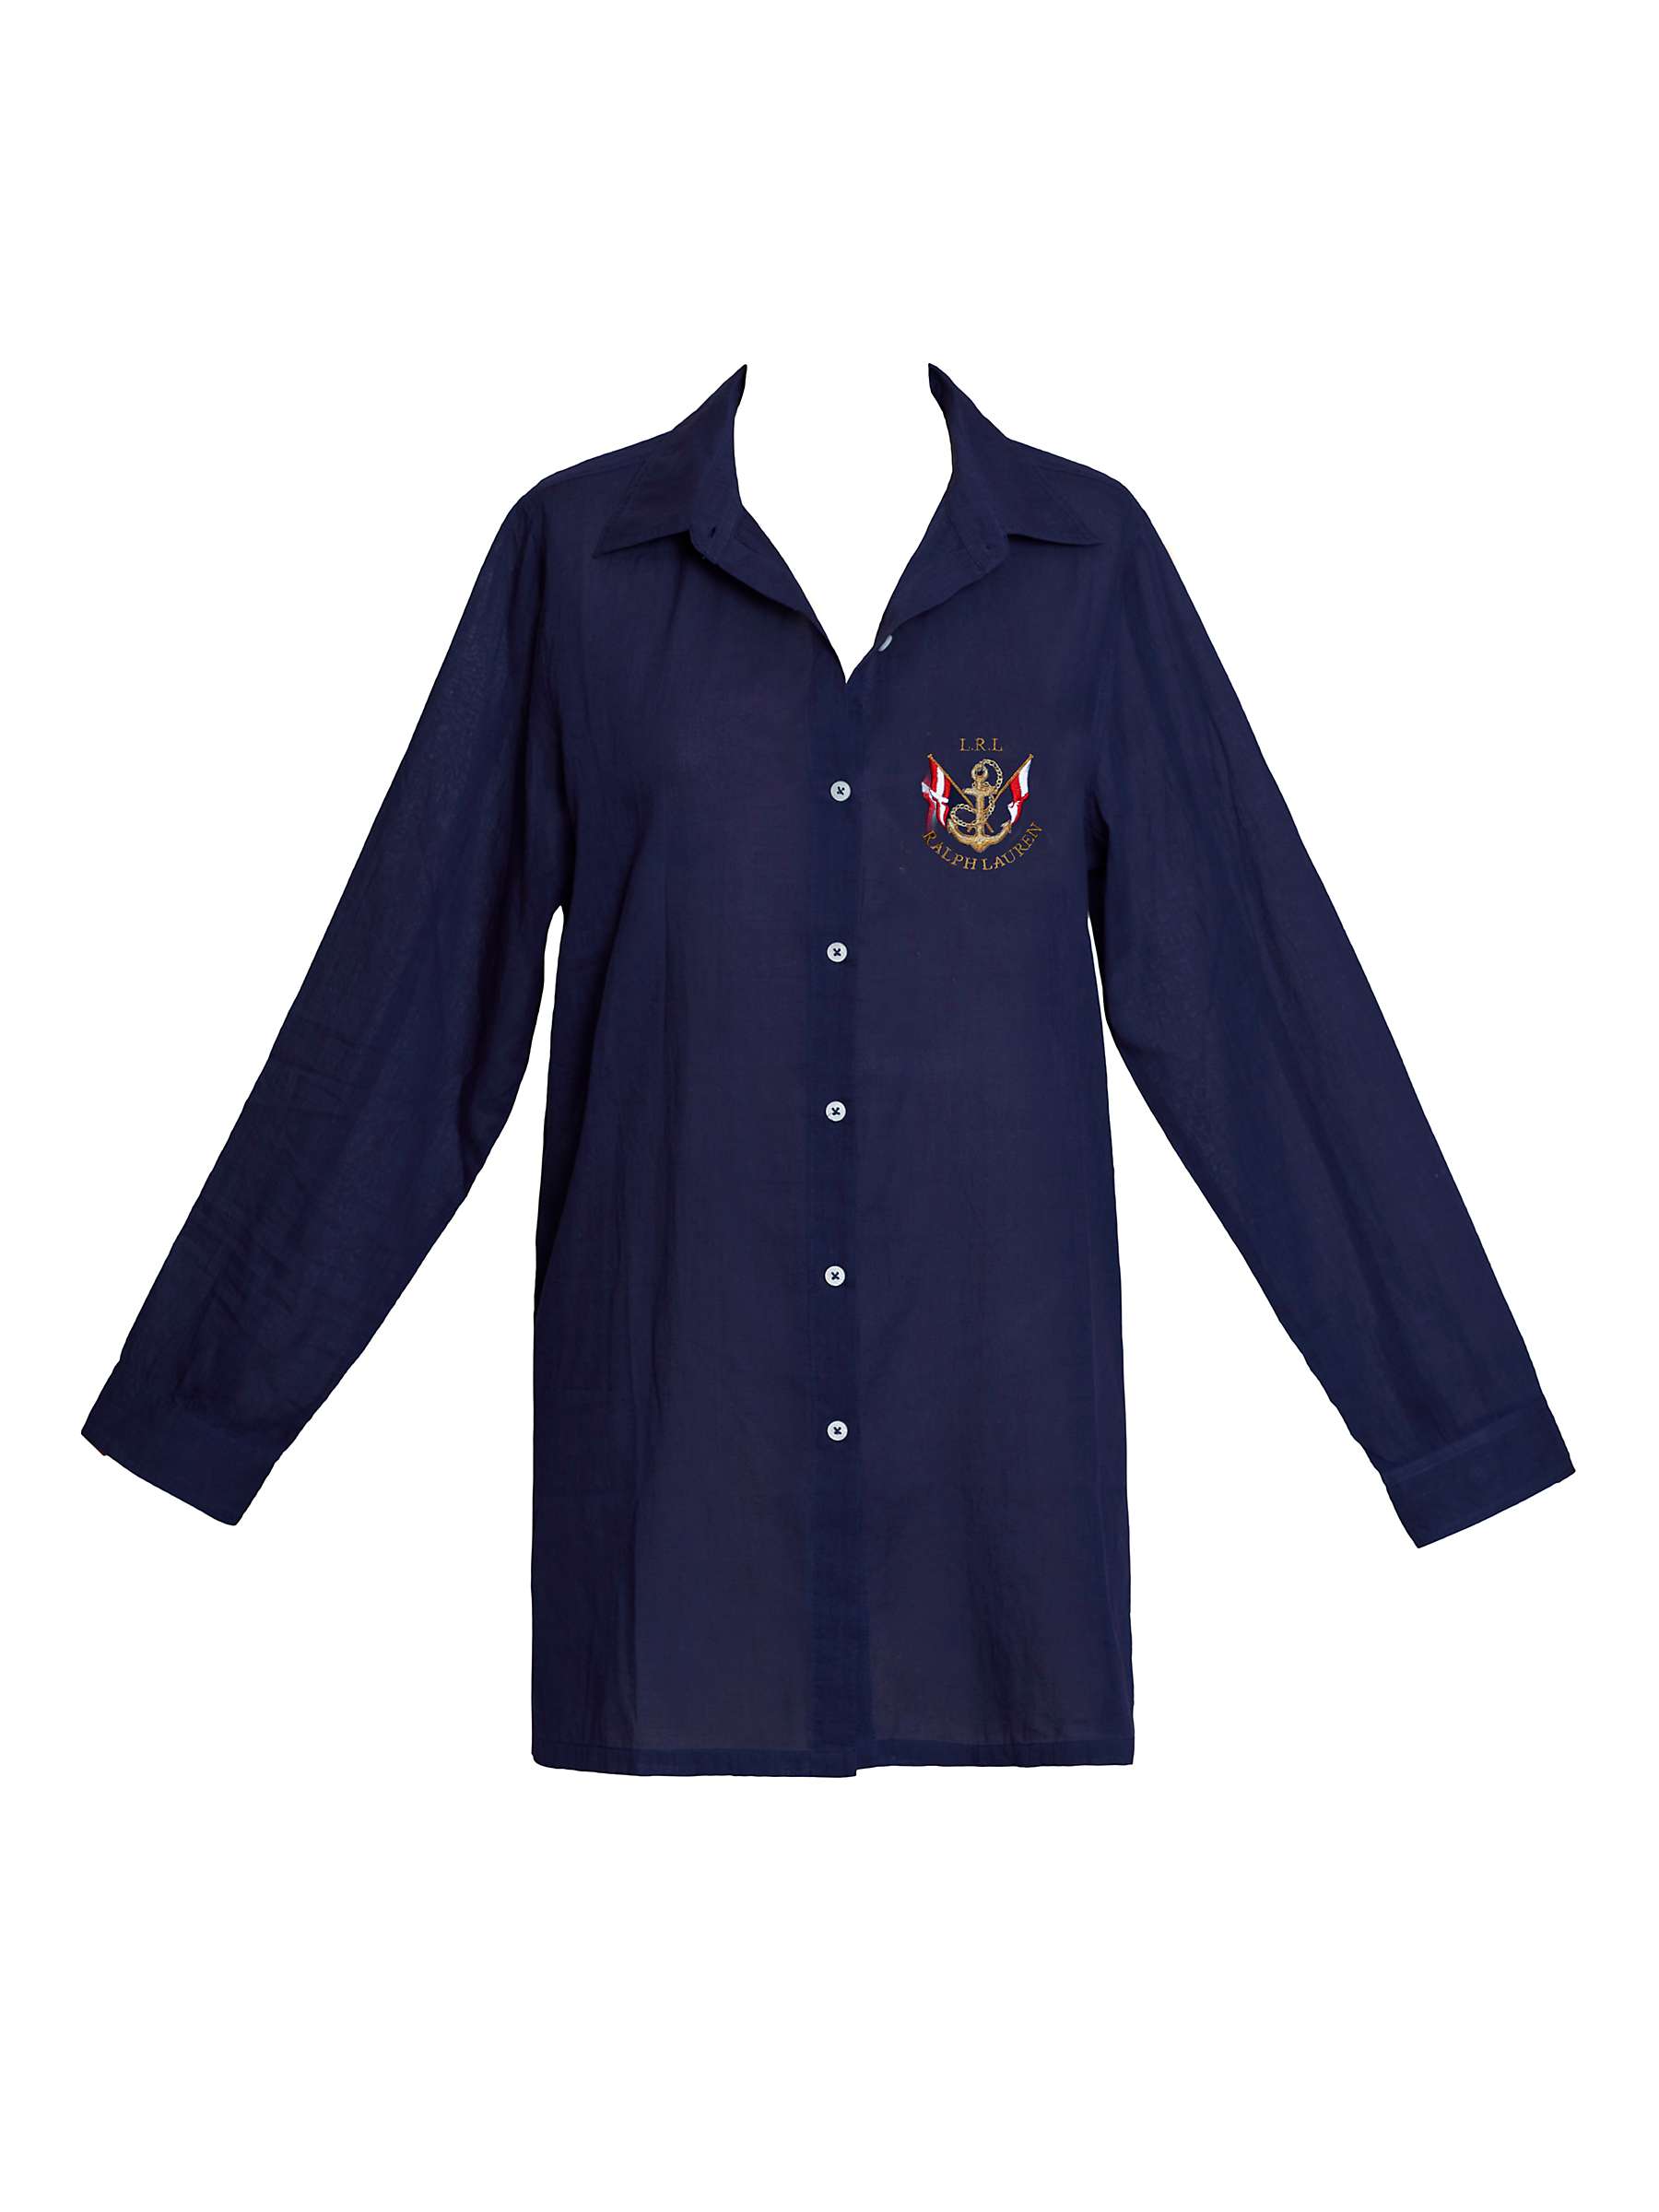 Buy Lauren Ralph Lauren Camp Logo Embroidered Oversized Cotton Shirt Online at johnlewis.com